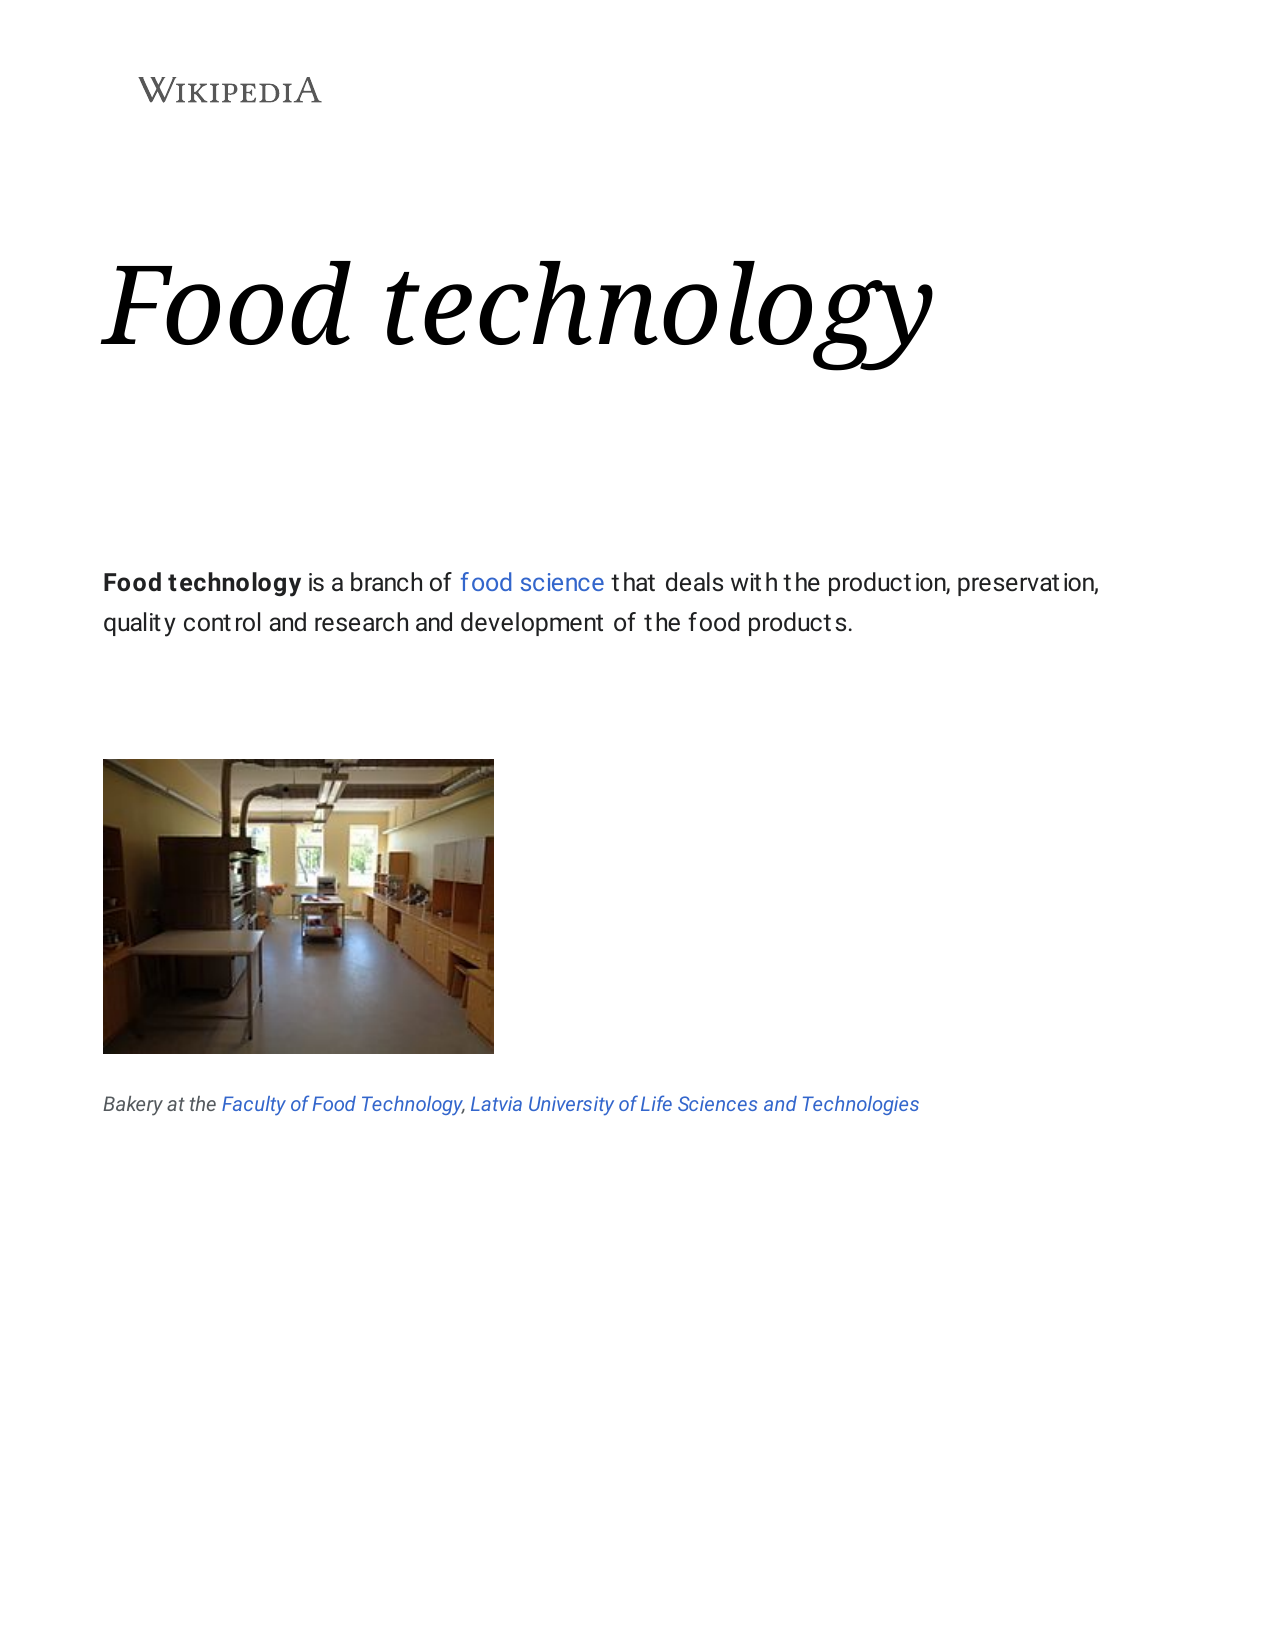 Food science - Wikipedia